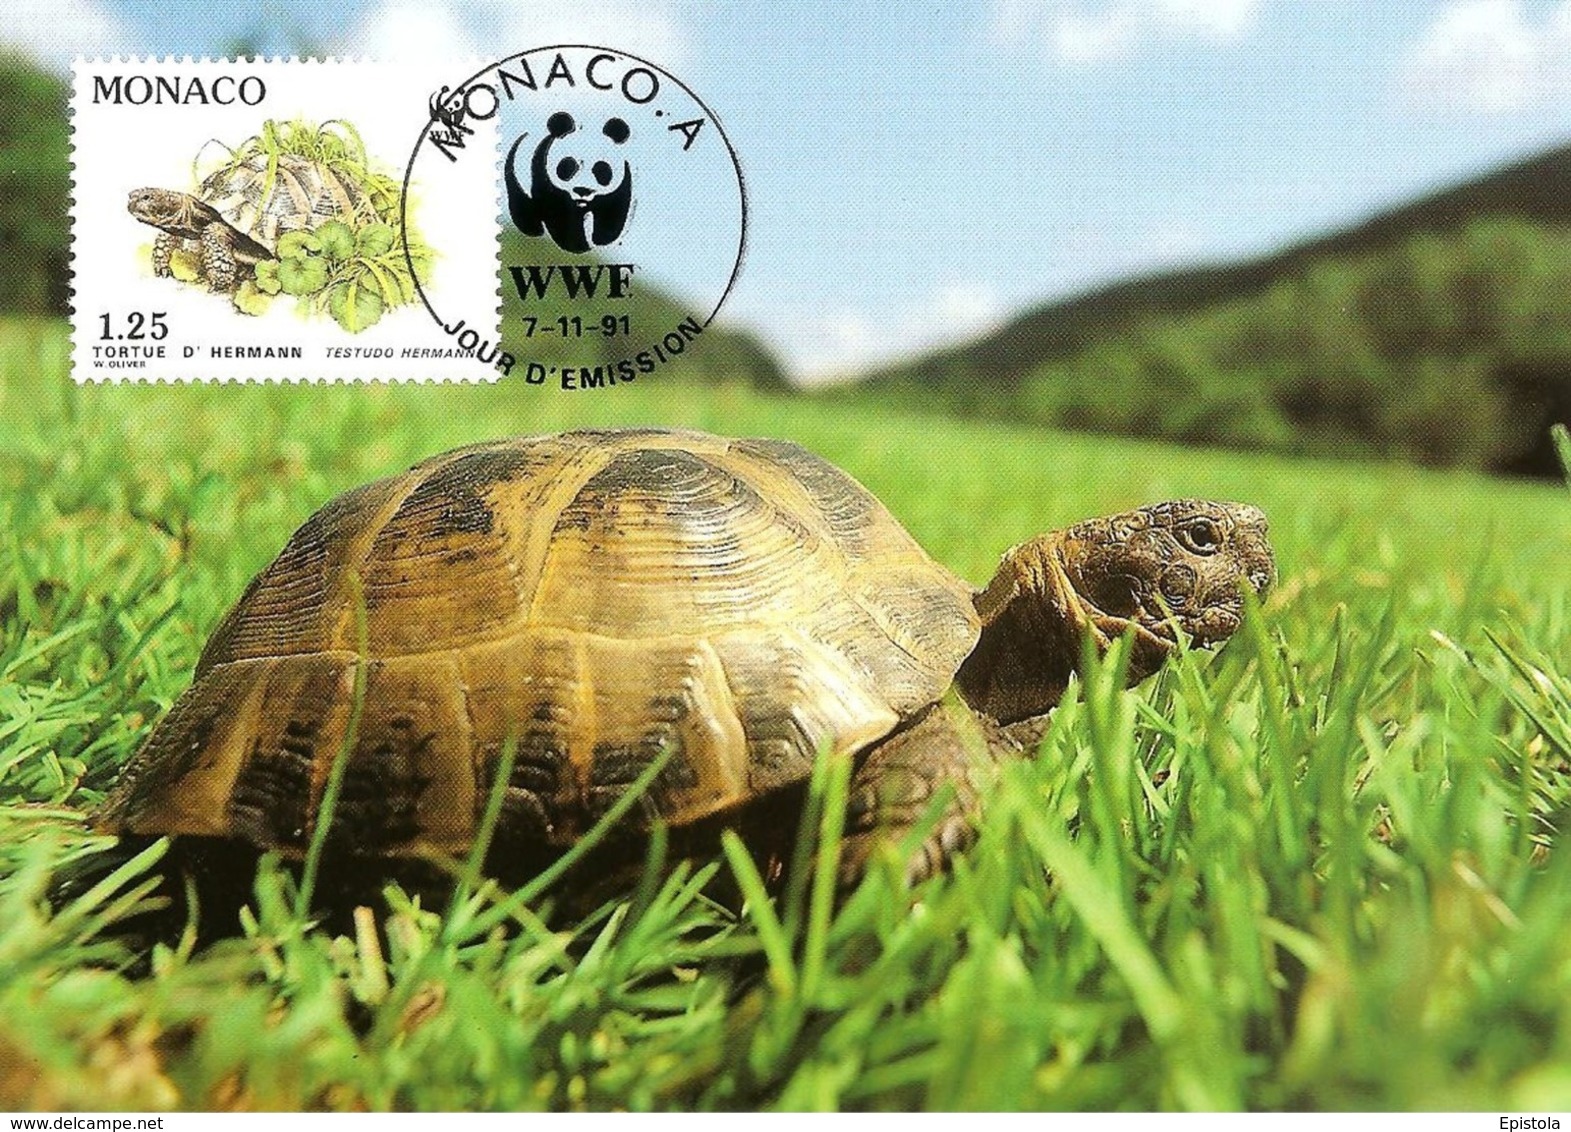 1991 - MONACO - Tortue Hermann Tortoise WWF - Verzamelingen